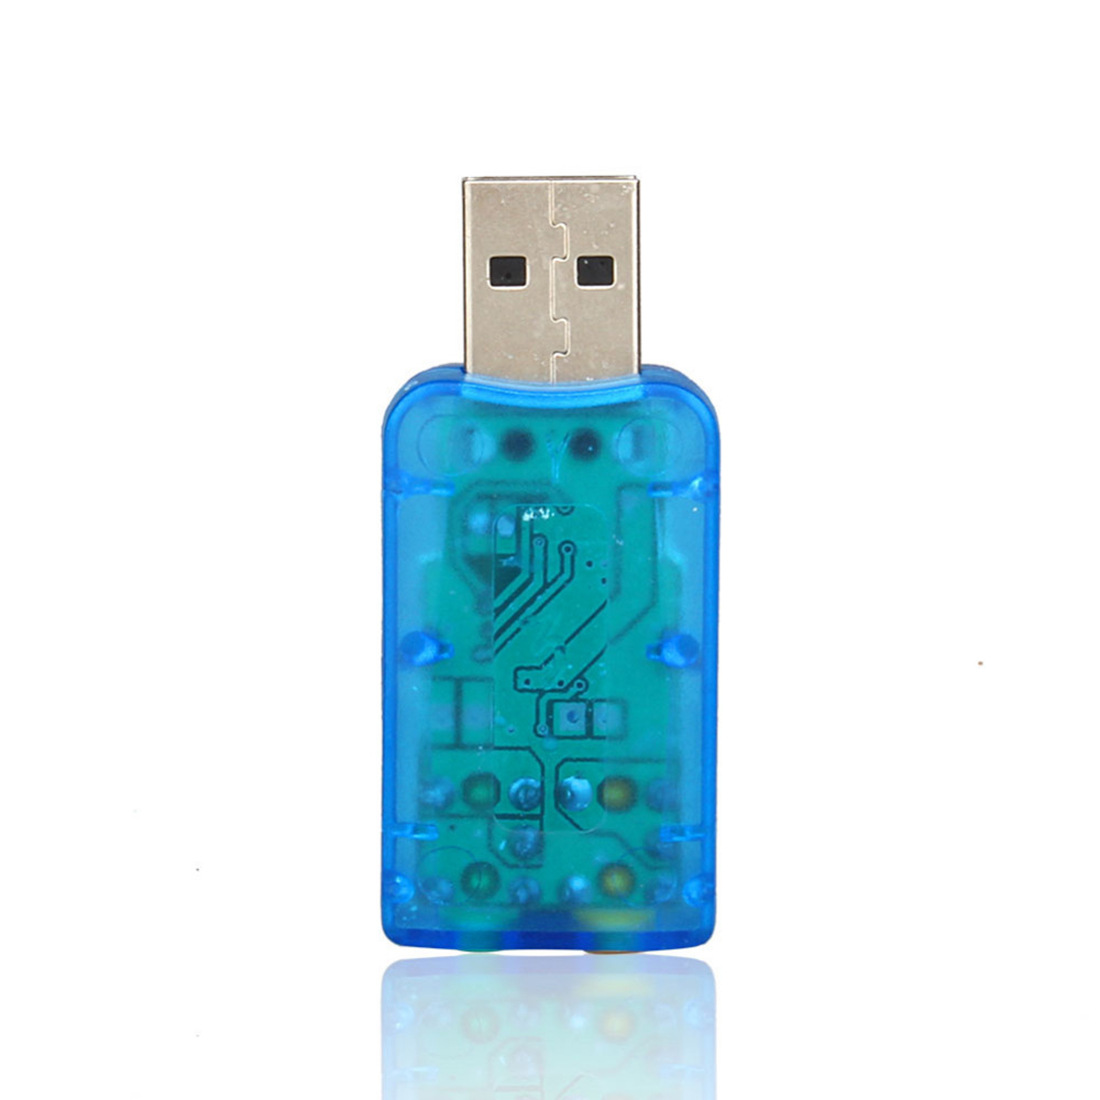 Comprar Interfaz de audio portátil Tarjeta de sonido USB